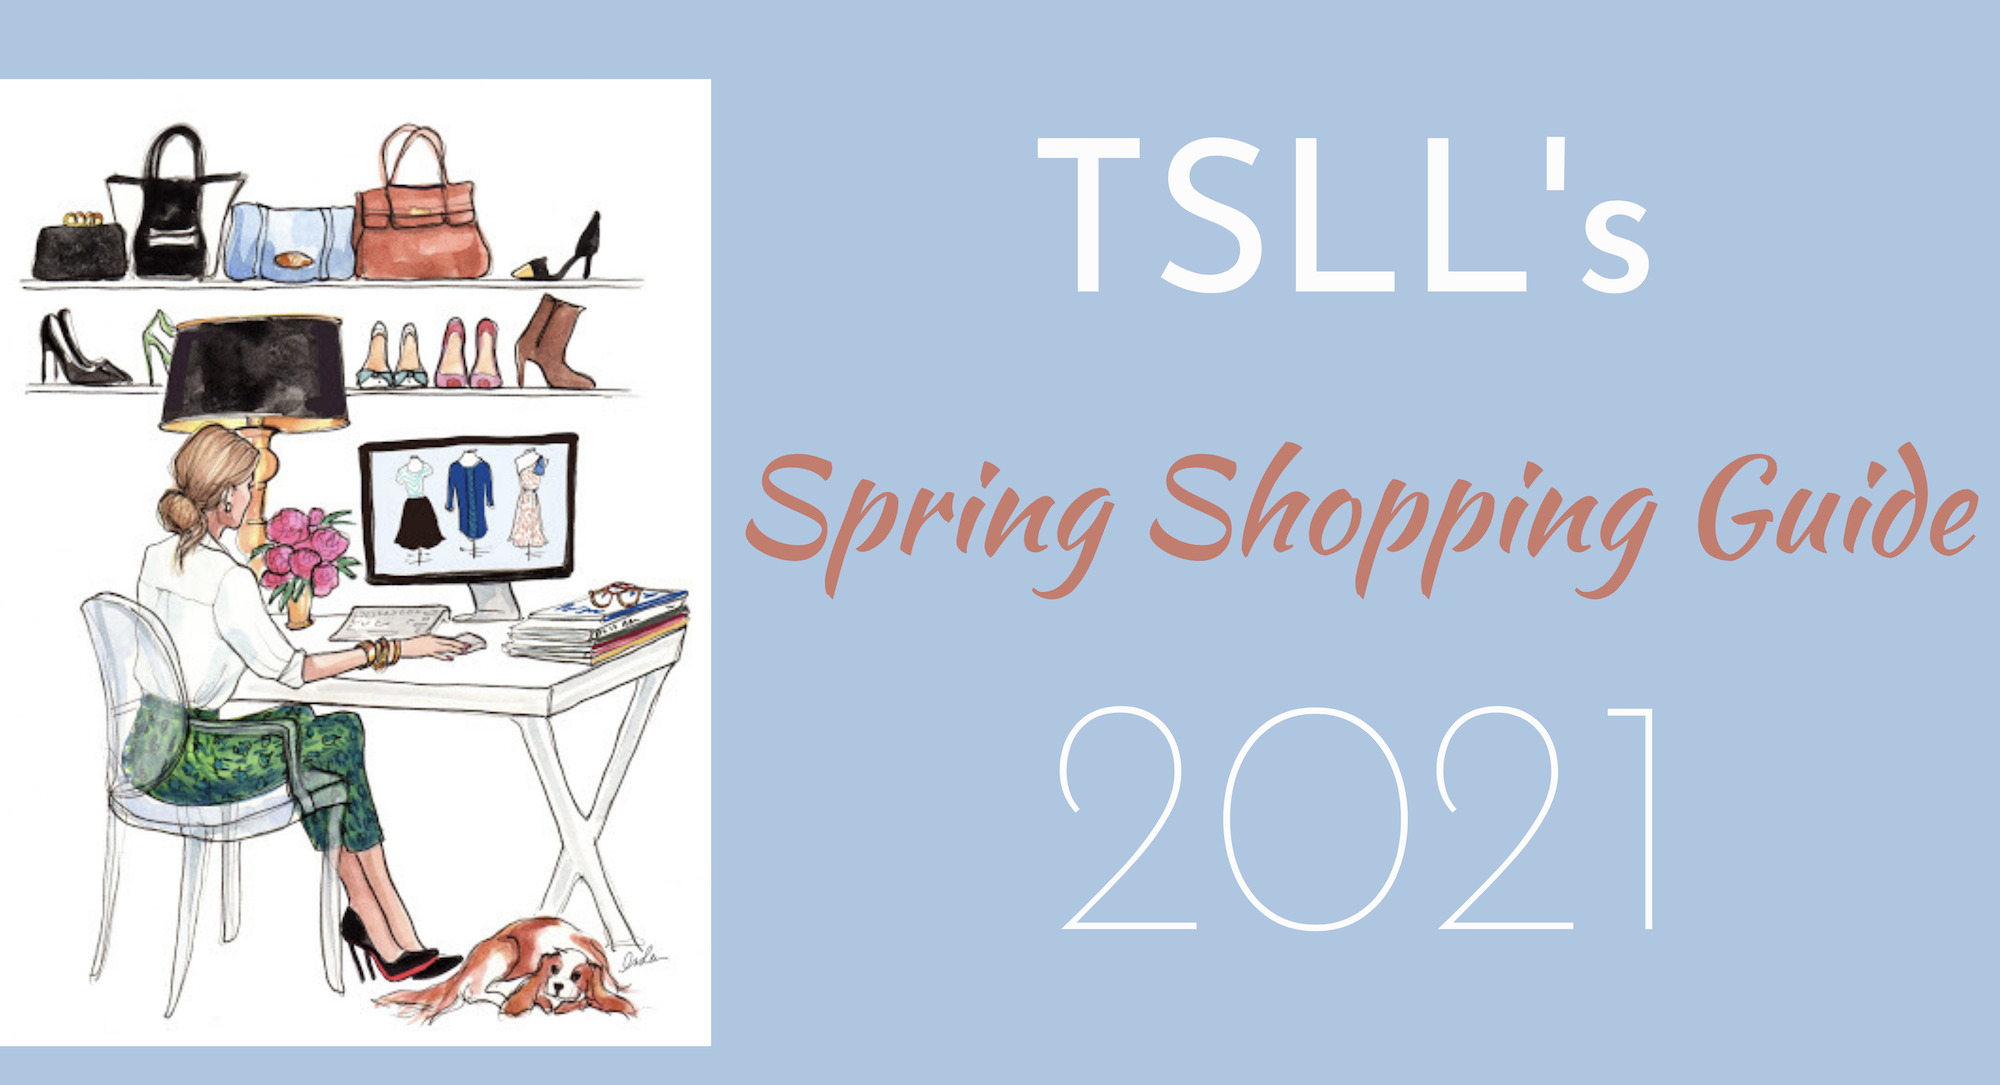 TSLL’s Spring Shopping Guide, 2021